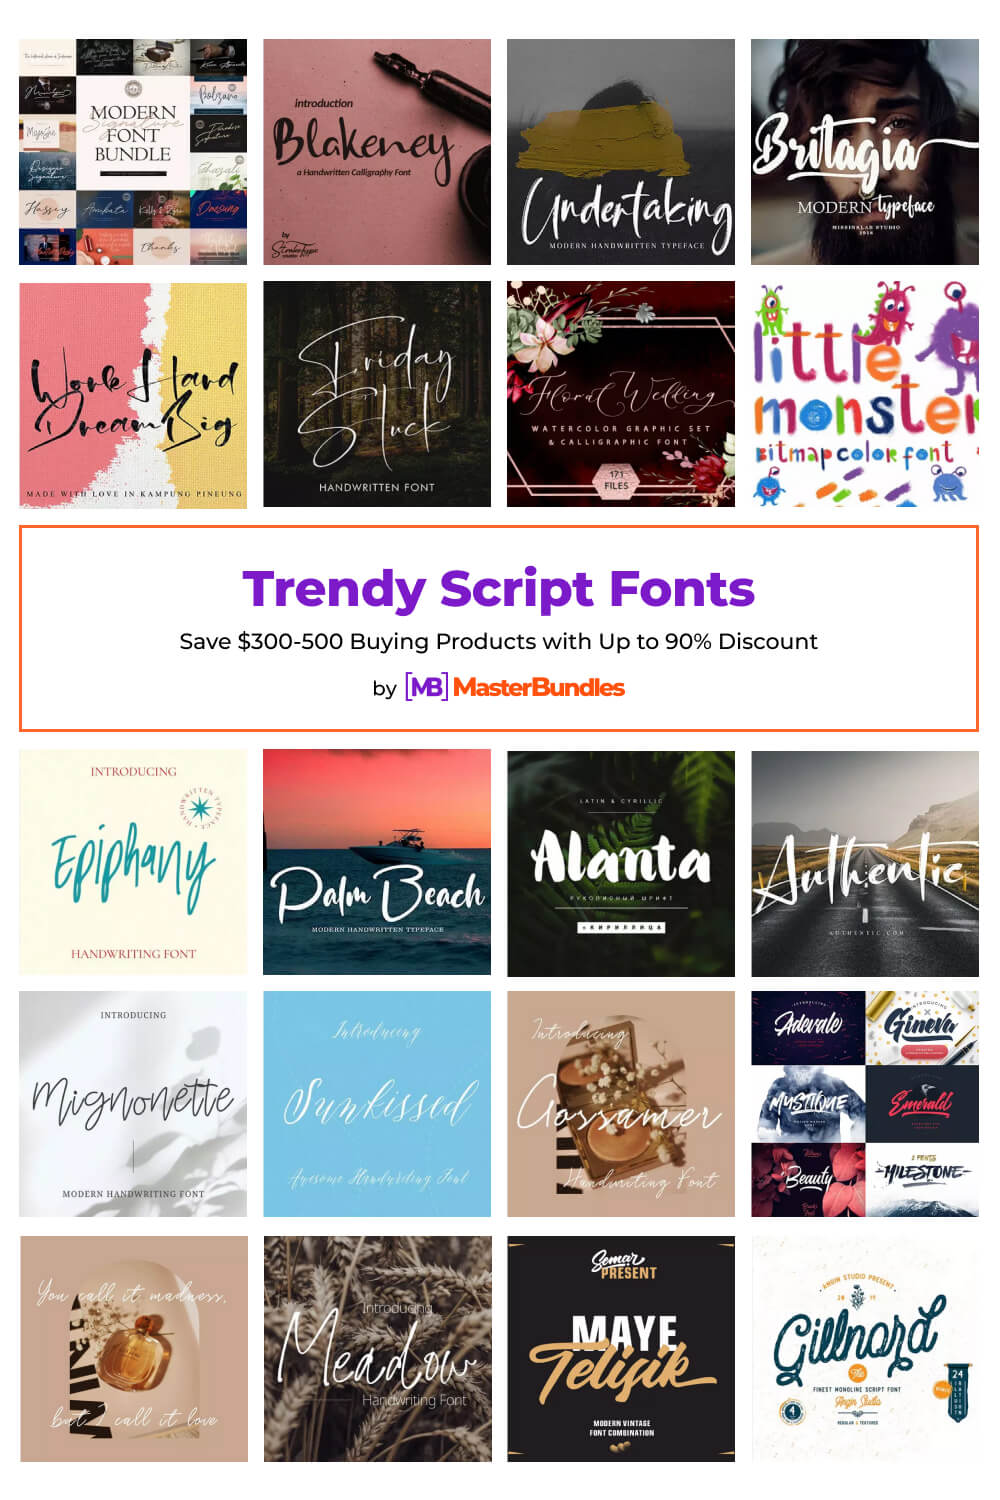 trendy script fonts pinterest image.